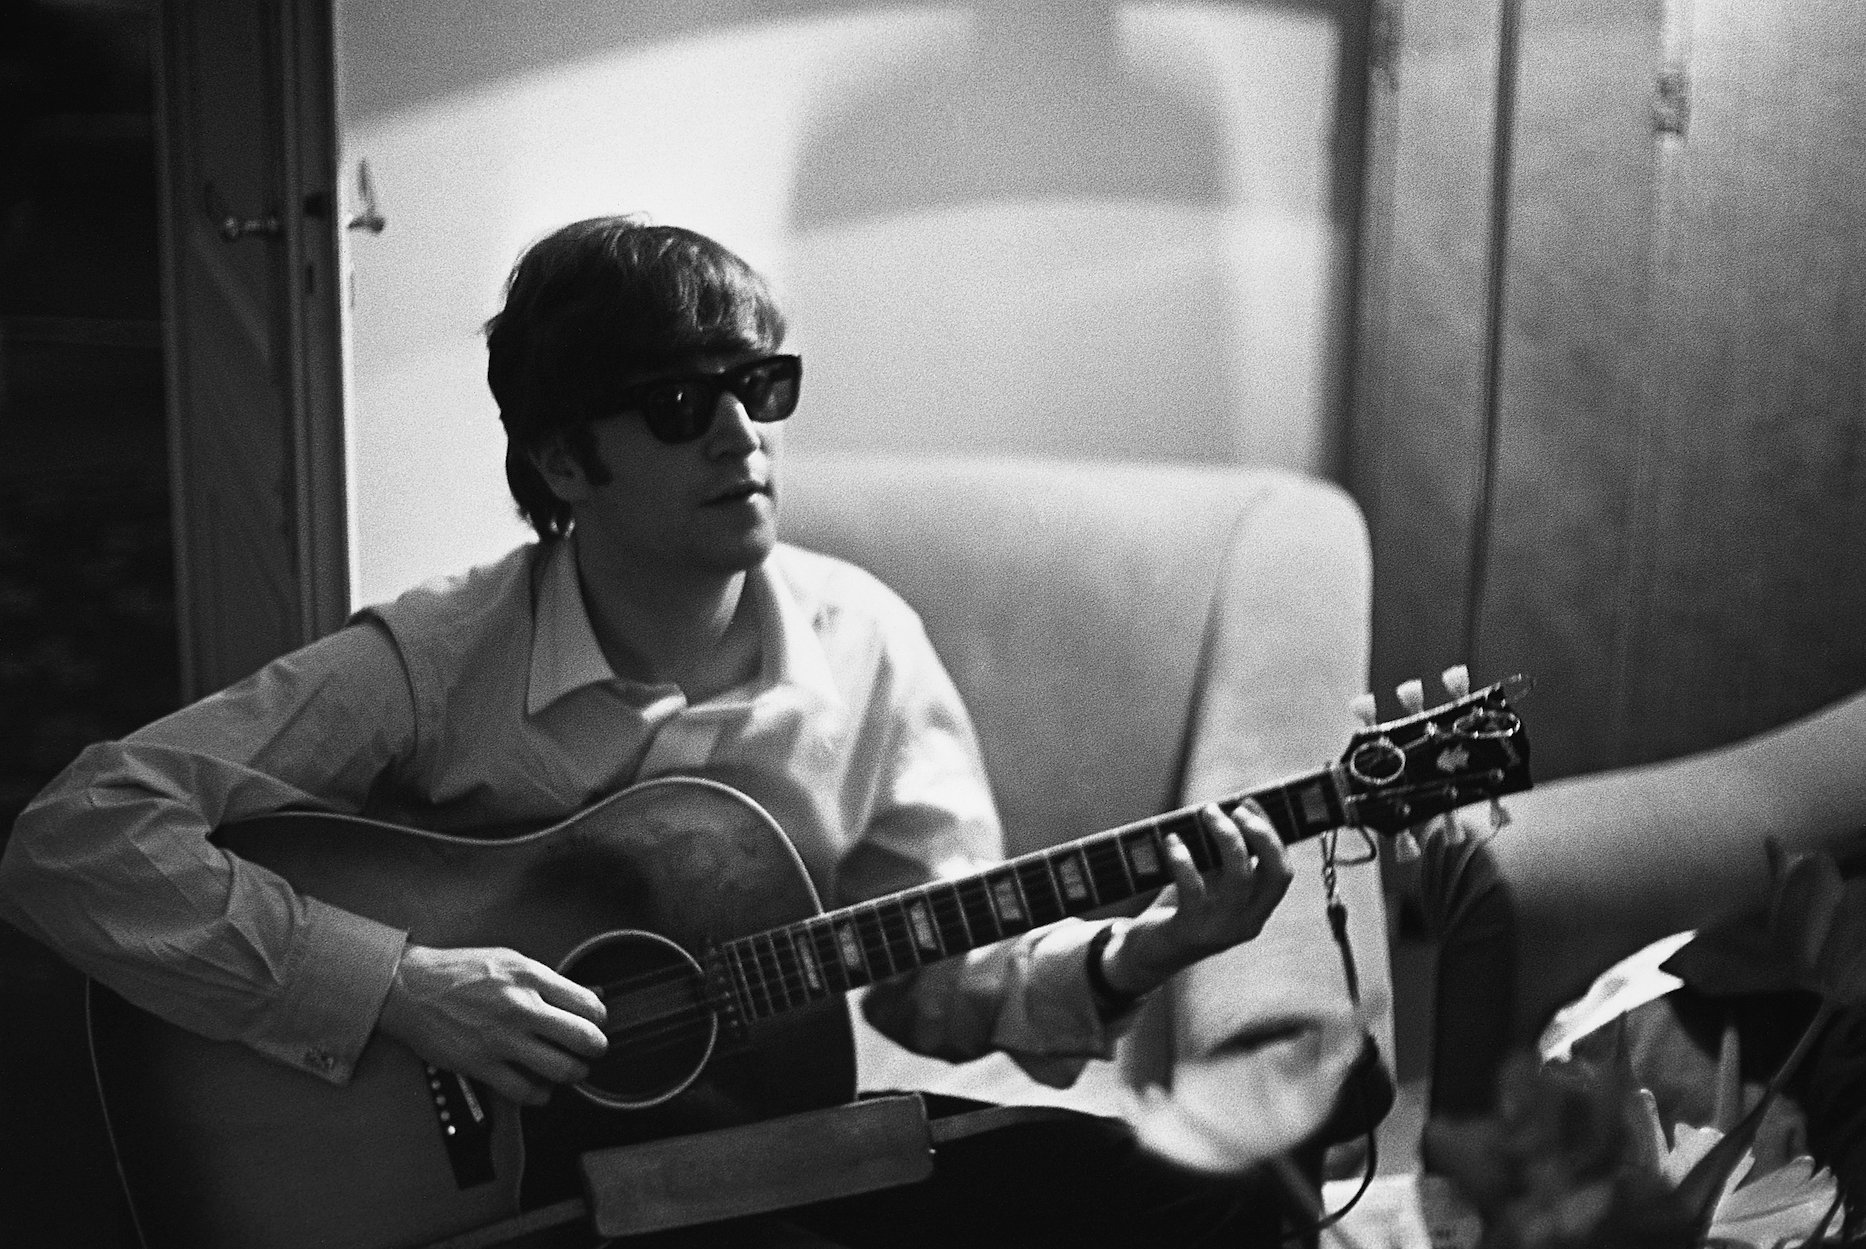 John Lennon of The Beatles plays the guitar in Paris